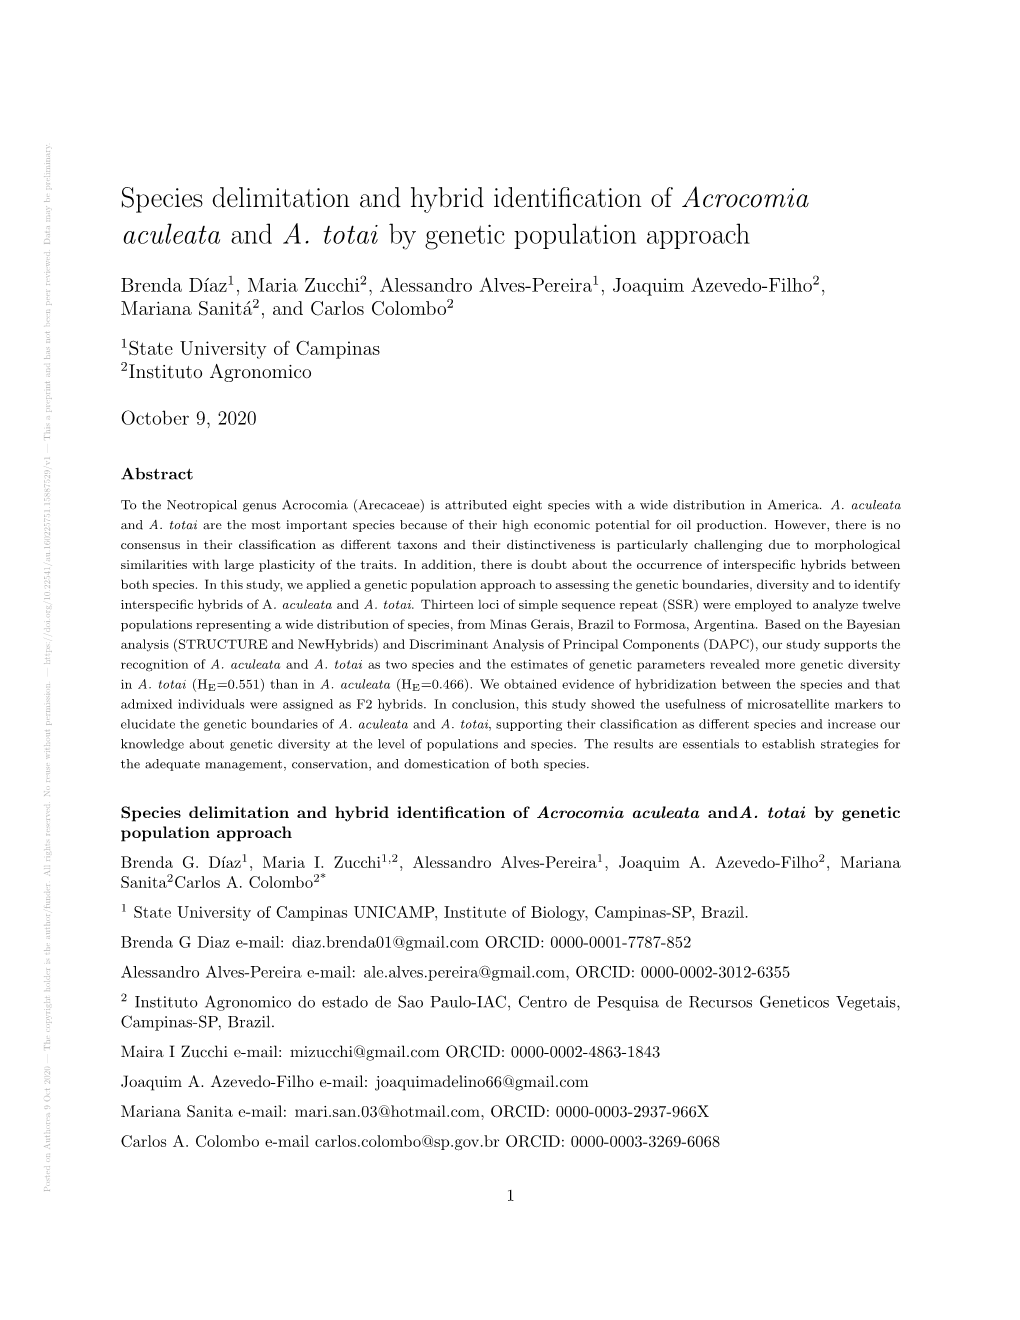 Species Delimitation and Hybrid Identification of Acrocomia Aculeata